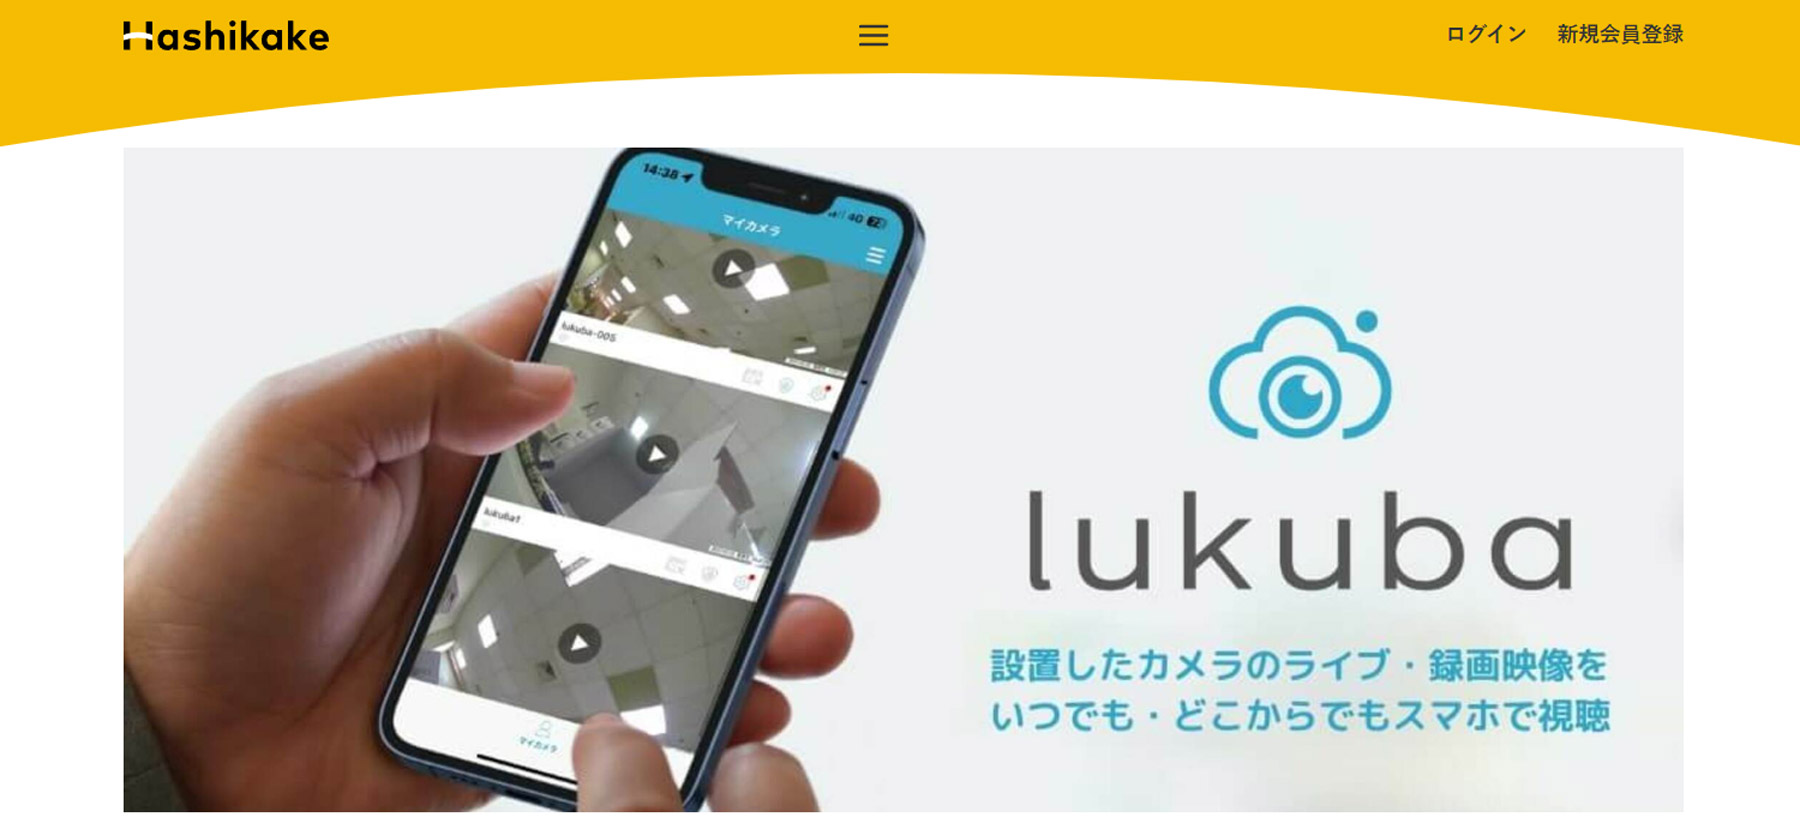 lukuba公式Webサイト